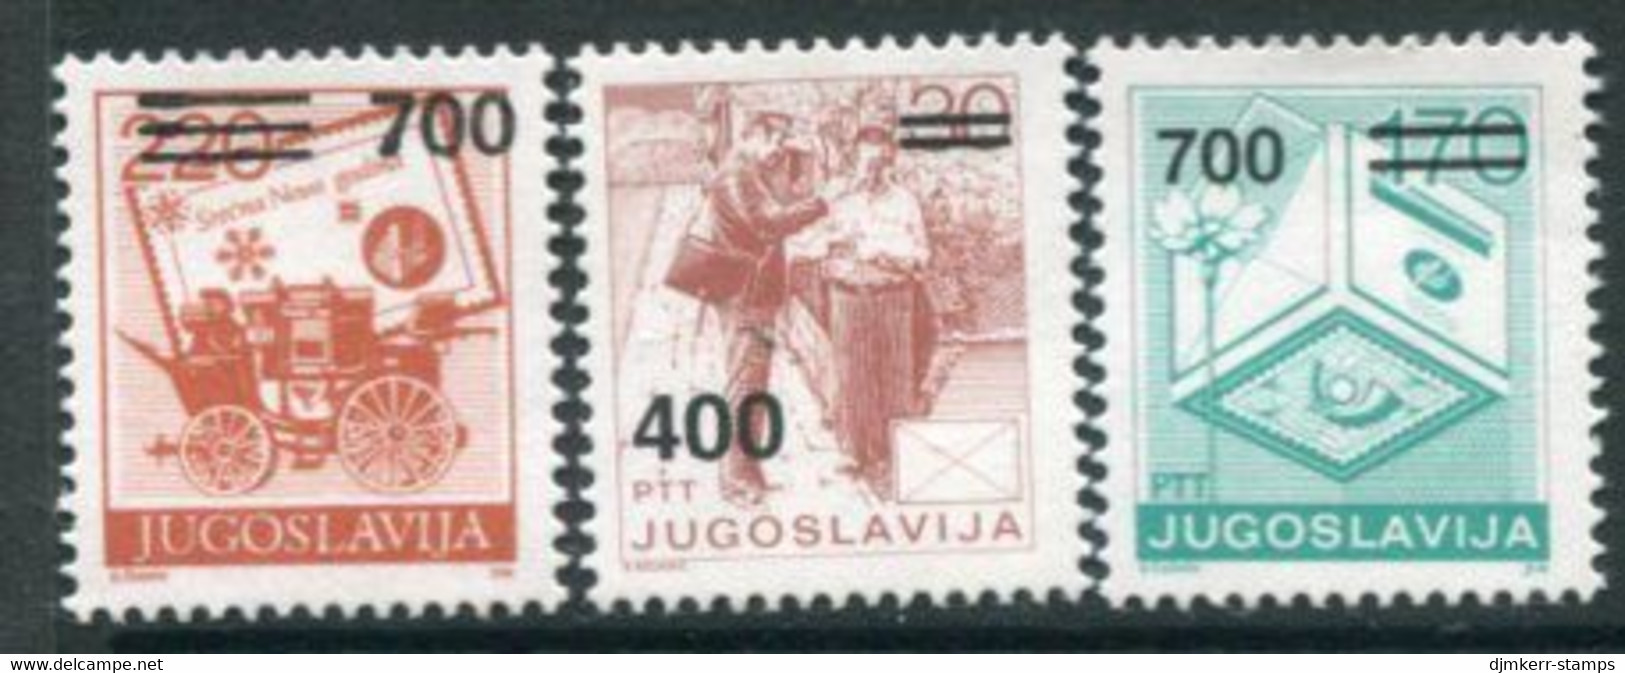 YUGOSLAVIA 1989 Surcharges 400 D, 700 D. (2) MNH / **.  Michel 2359, 2363-64 - Unused Stamps